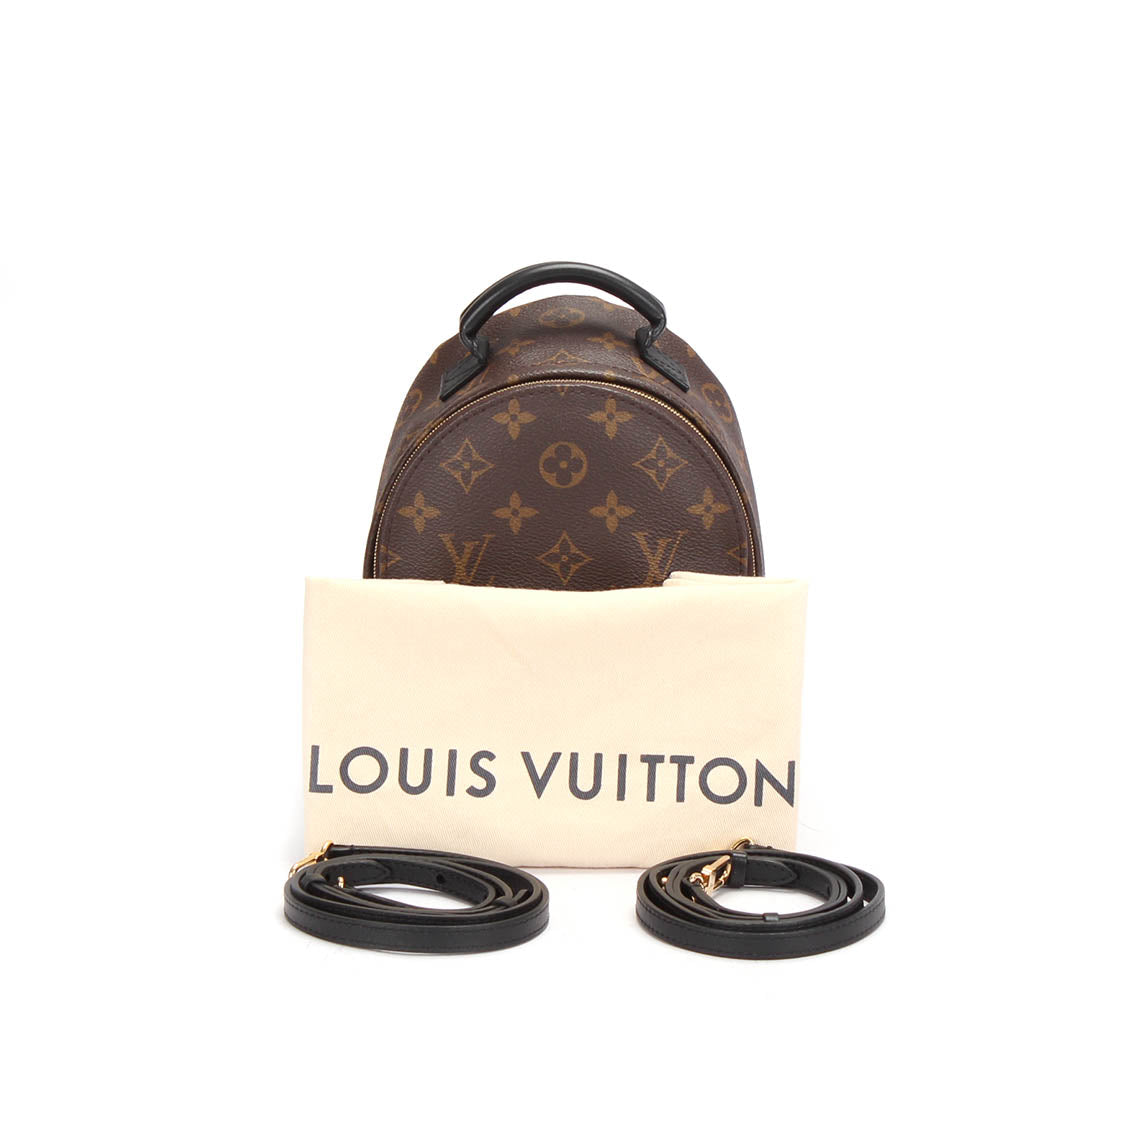 Shop Louis Vuitton MONOGRAM Palm springs mini (M44872, M44873) by lufine